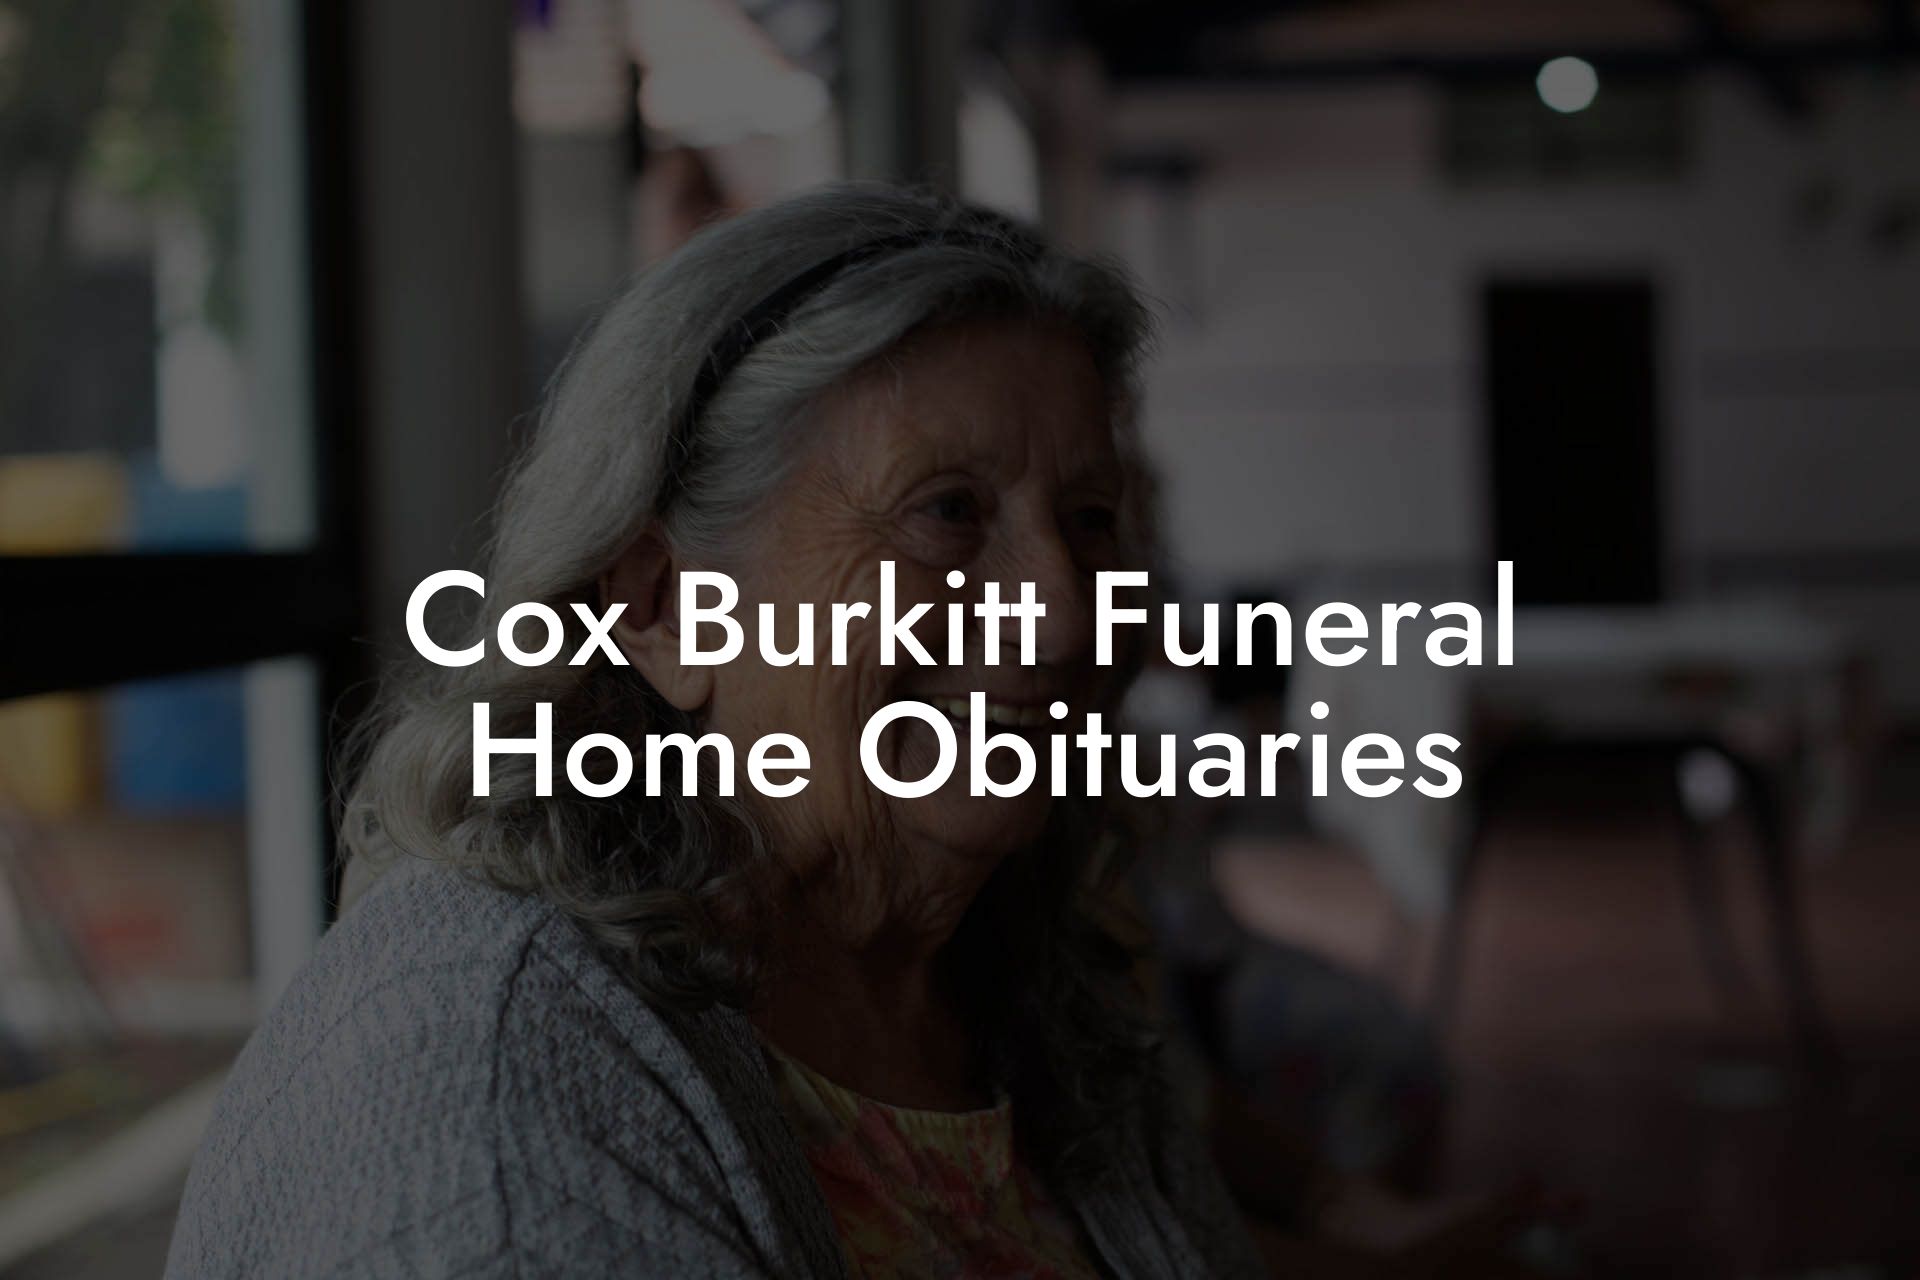 Cox Burkitt Funeral Home Obituaries